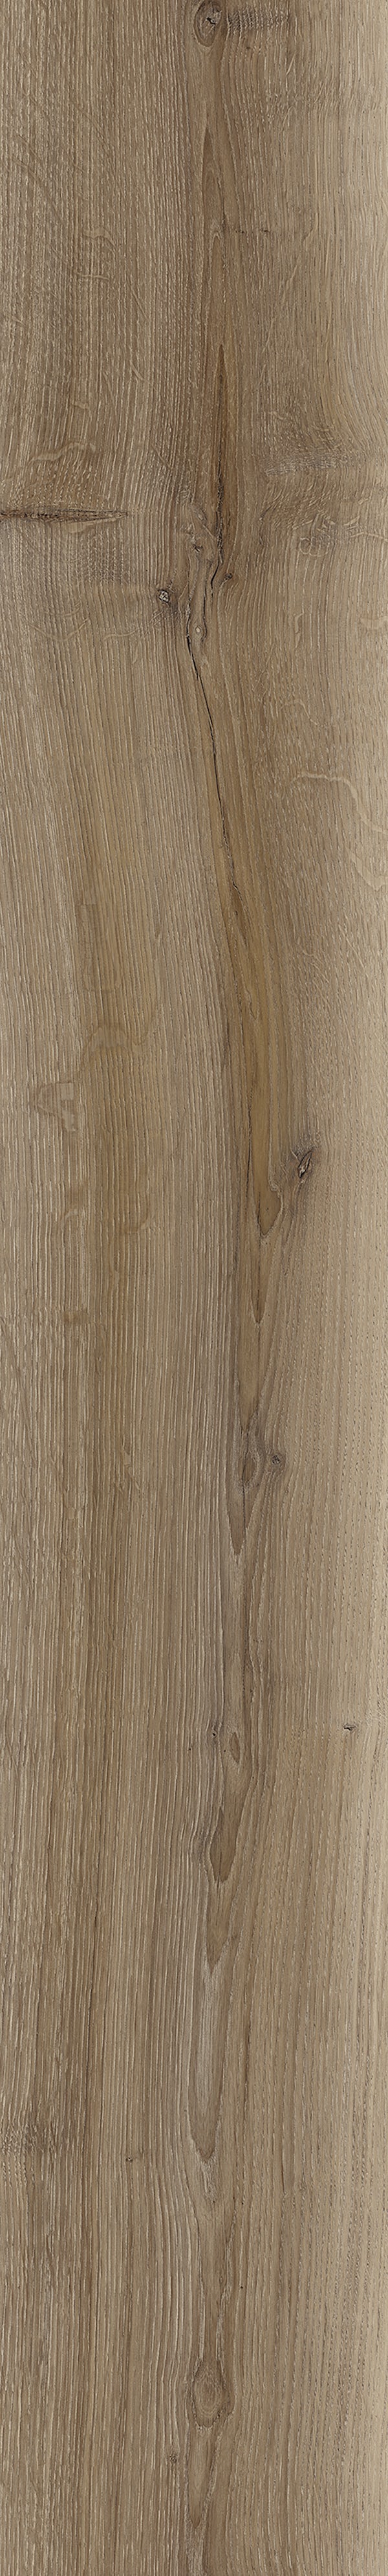 Calcolo Ontario heritage oak mix plank water resistant laminate flooring 8mm